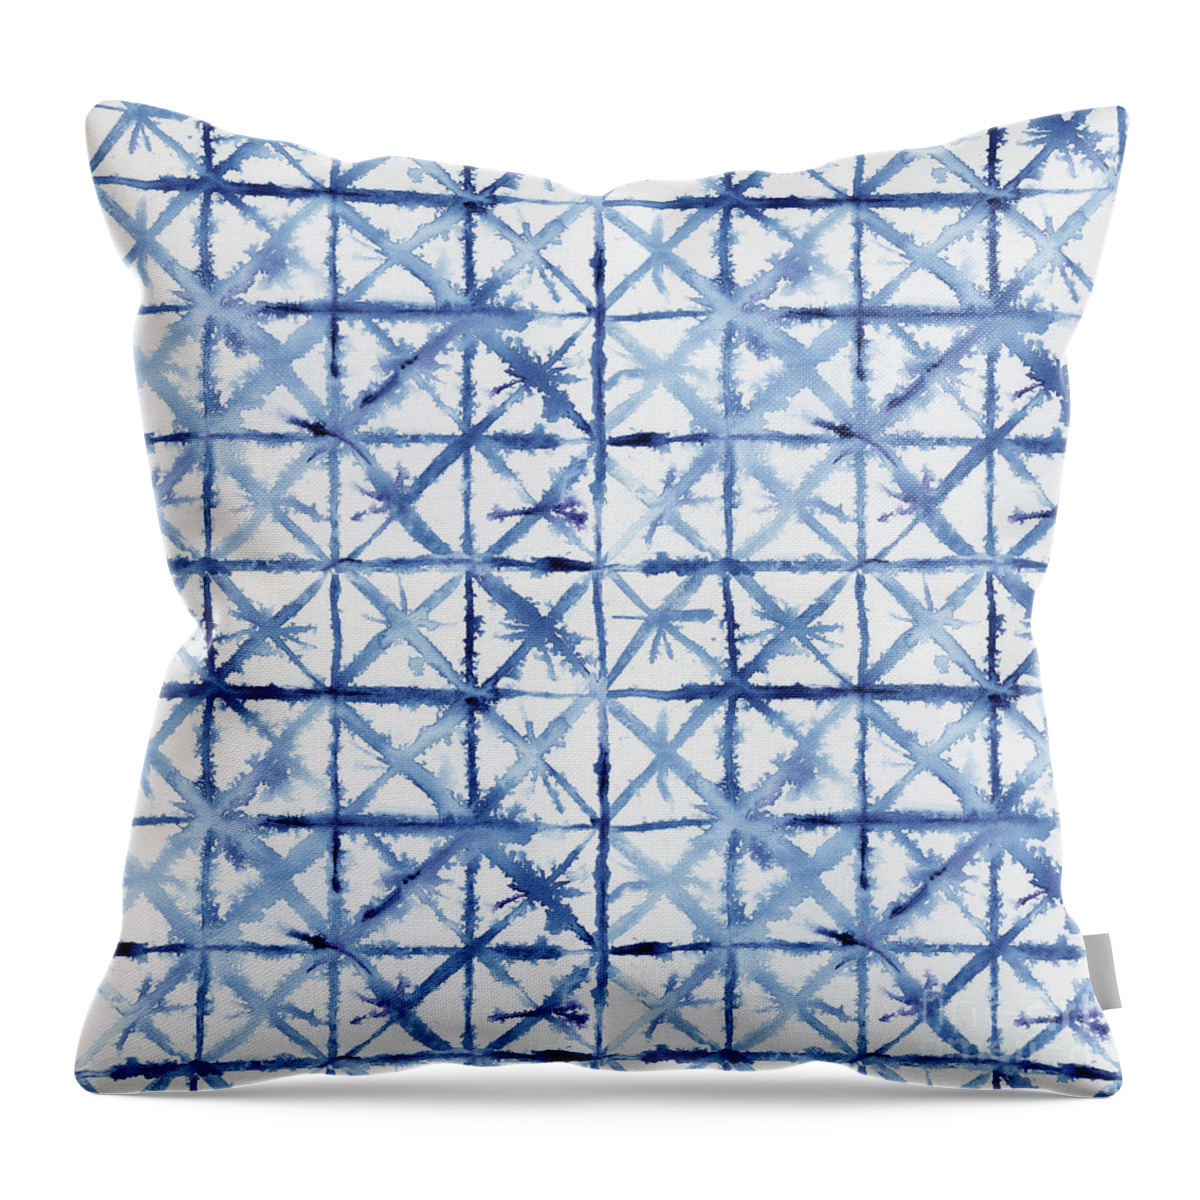 Shibori Throw Pillow featuring the painting Shibori Kubo Watecolor X Pattern Line Work Indigo Blue by Audrey Jeanne Roberts